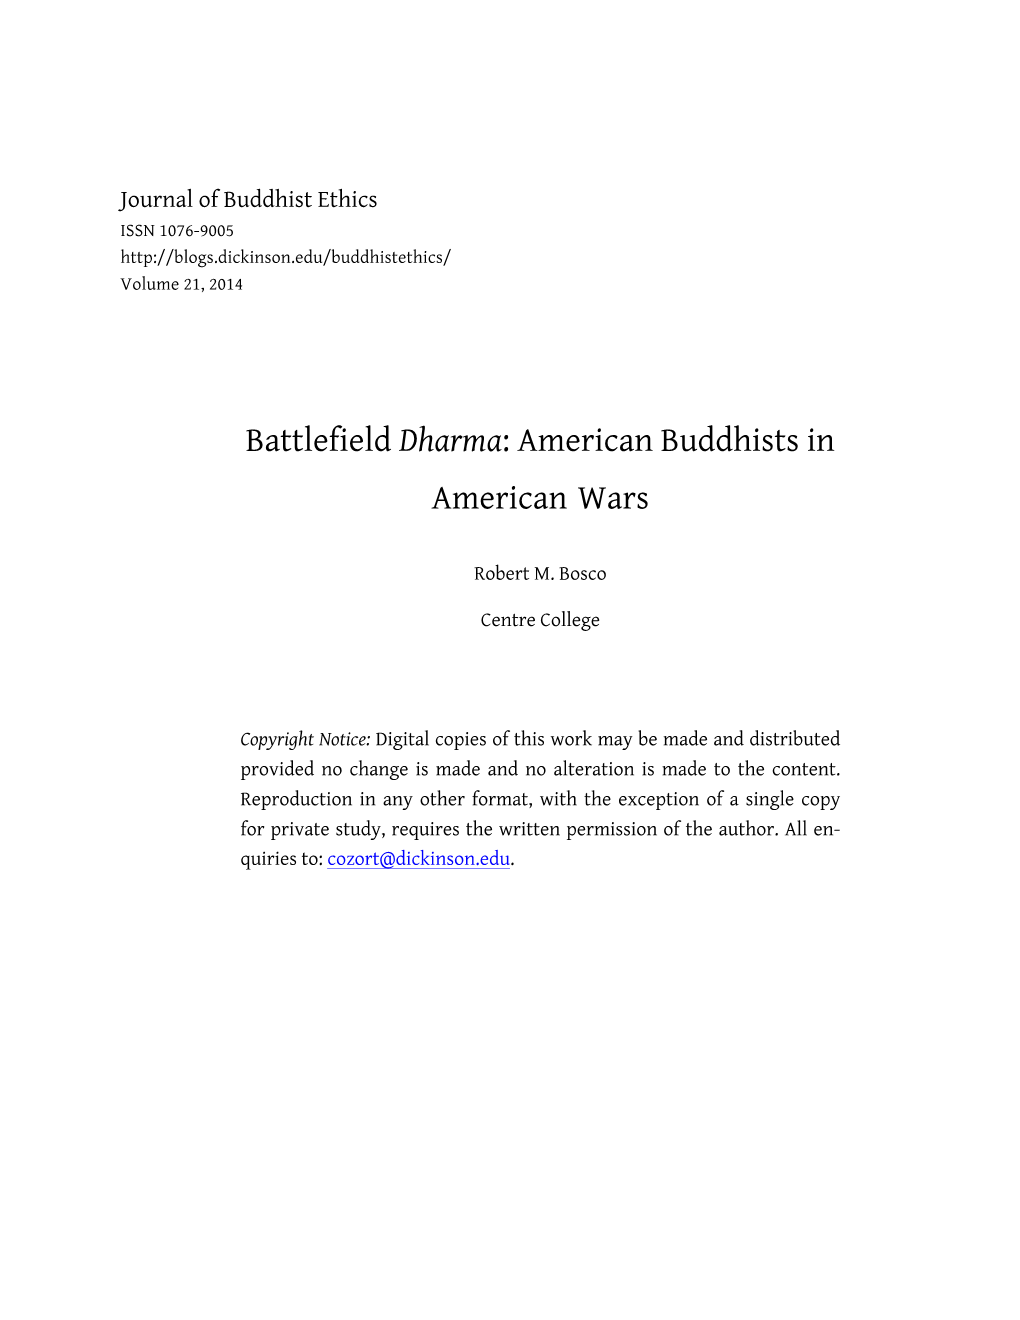 Battlefield Dharma: American Buddhists in American Wars